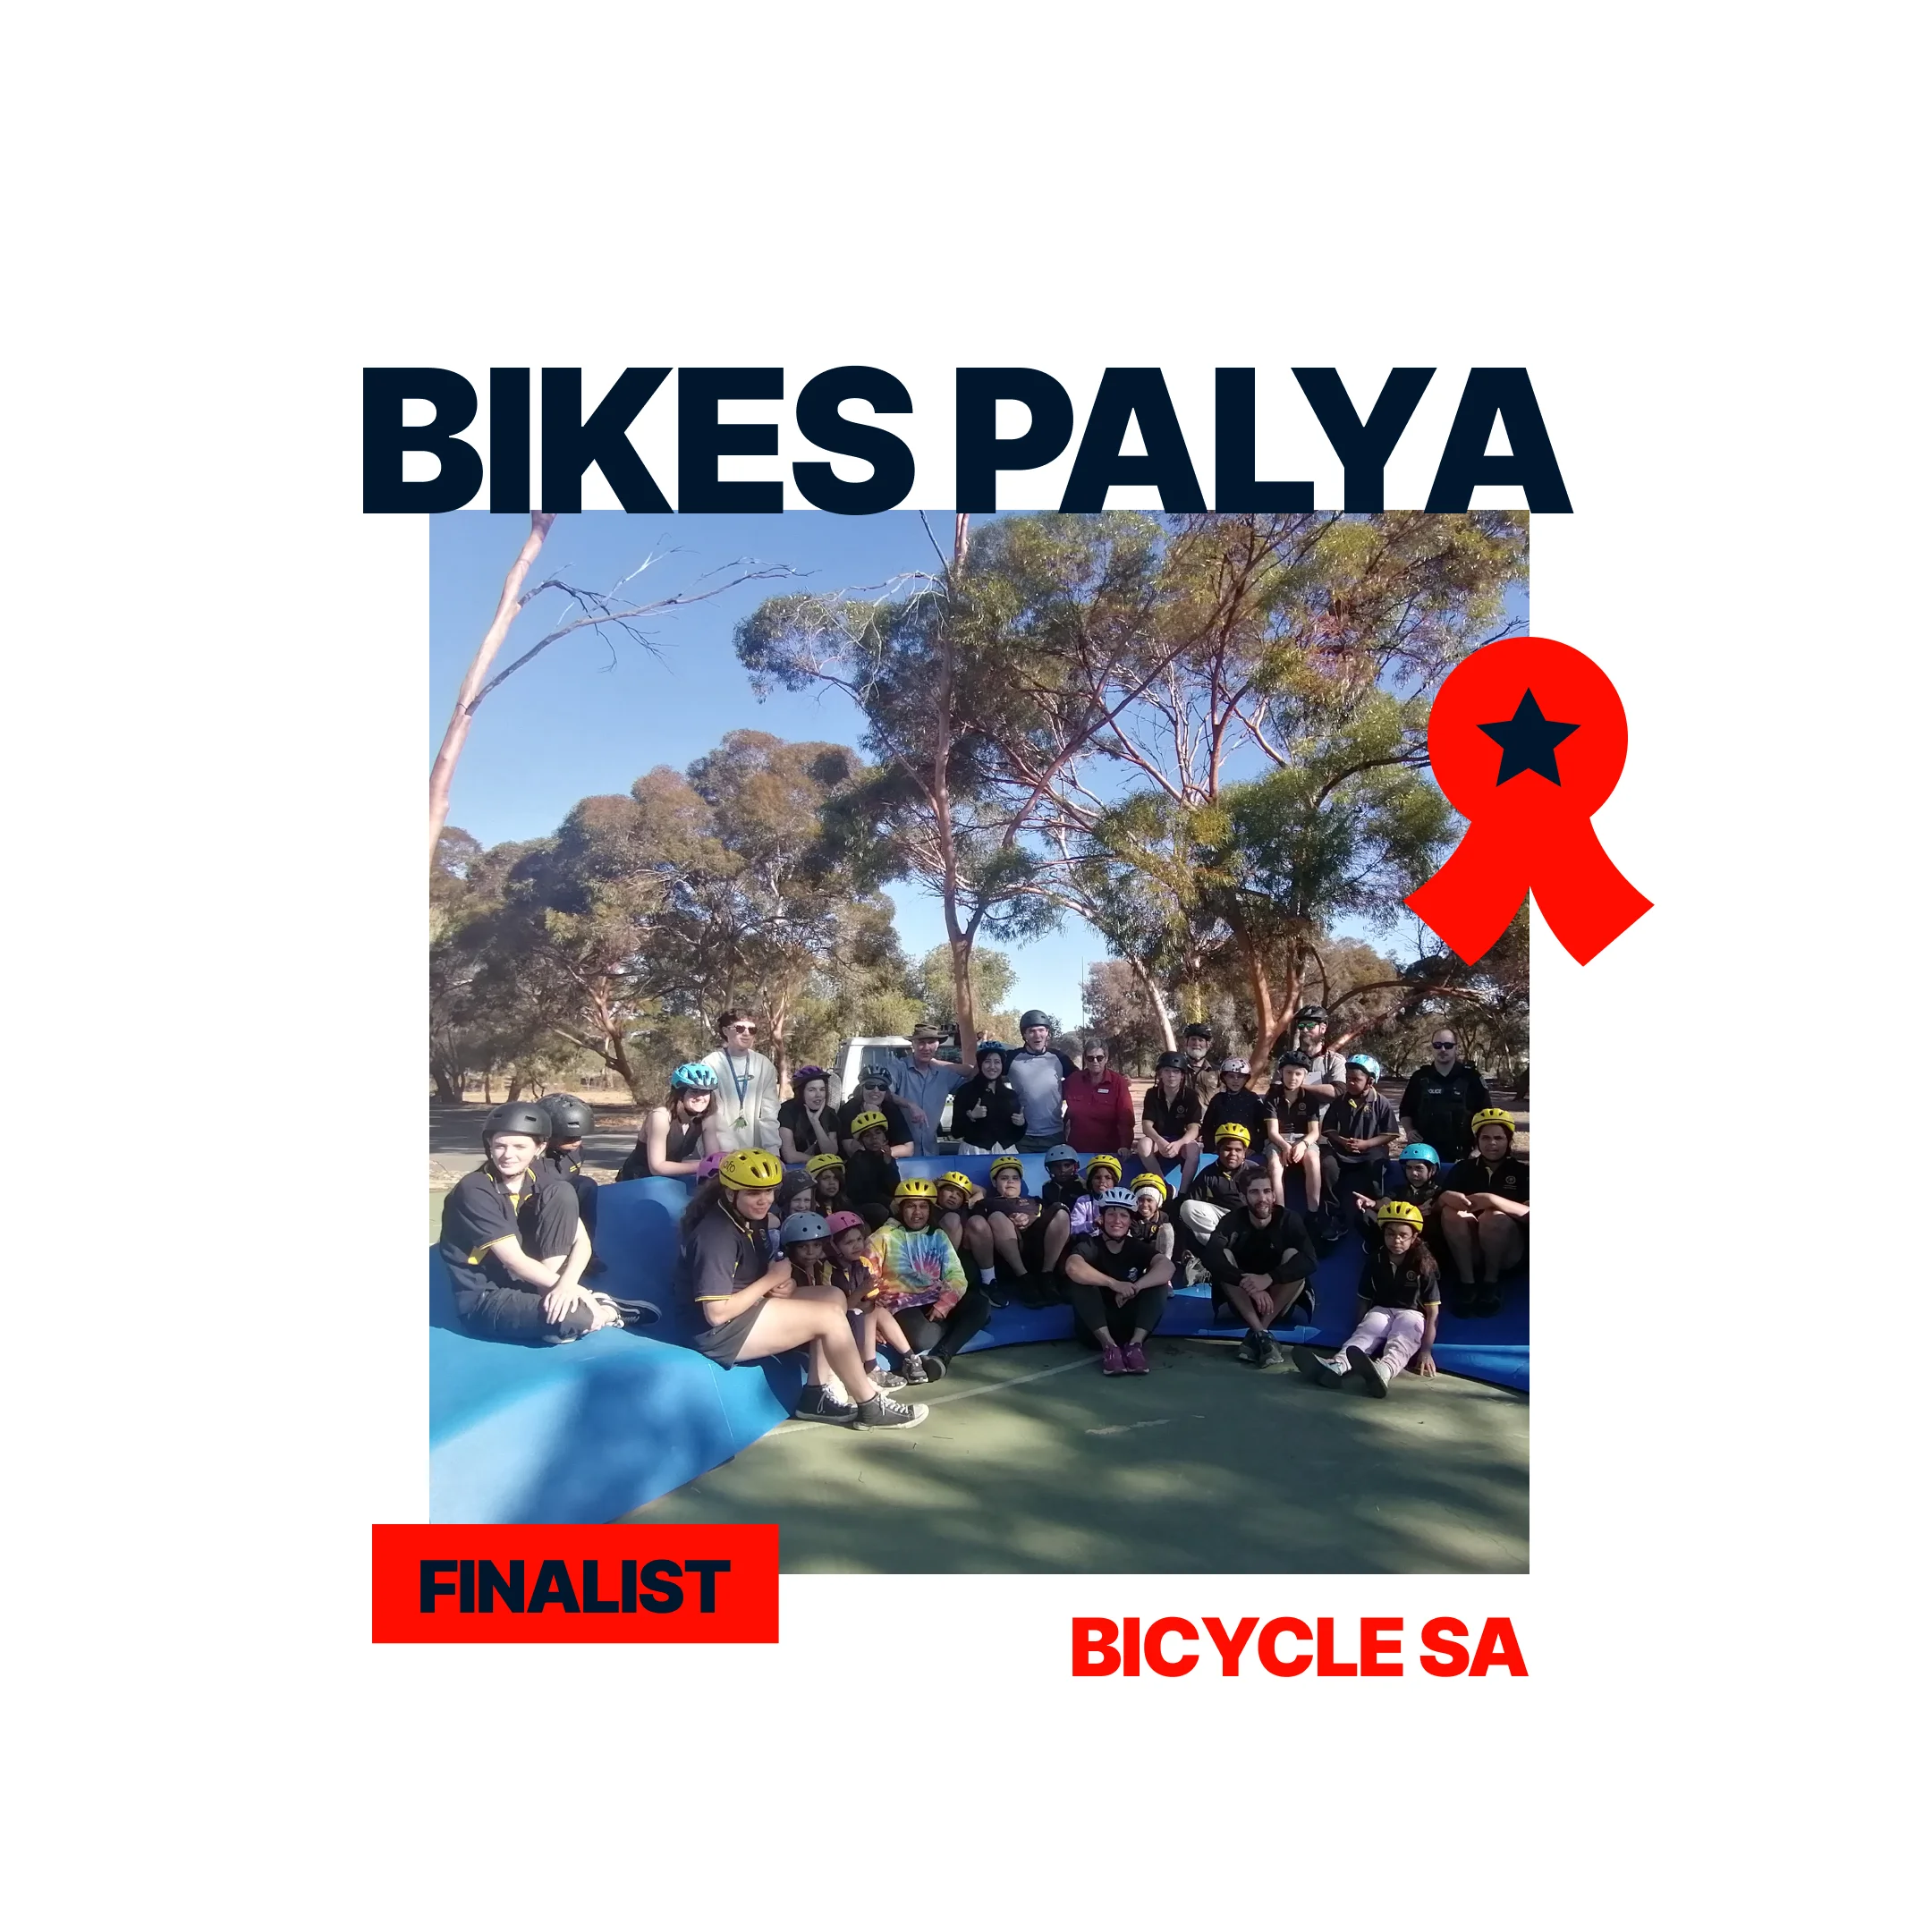 Bikes Palya, Bicycle SA